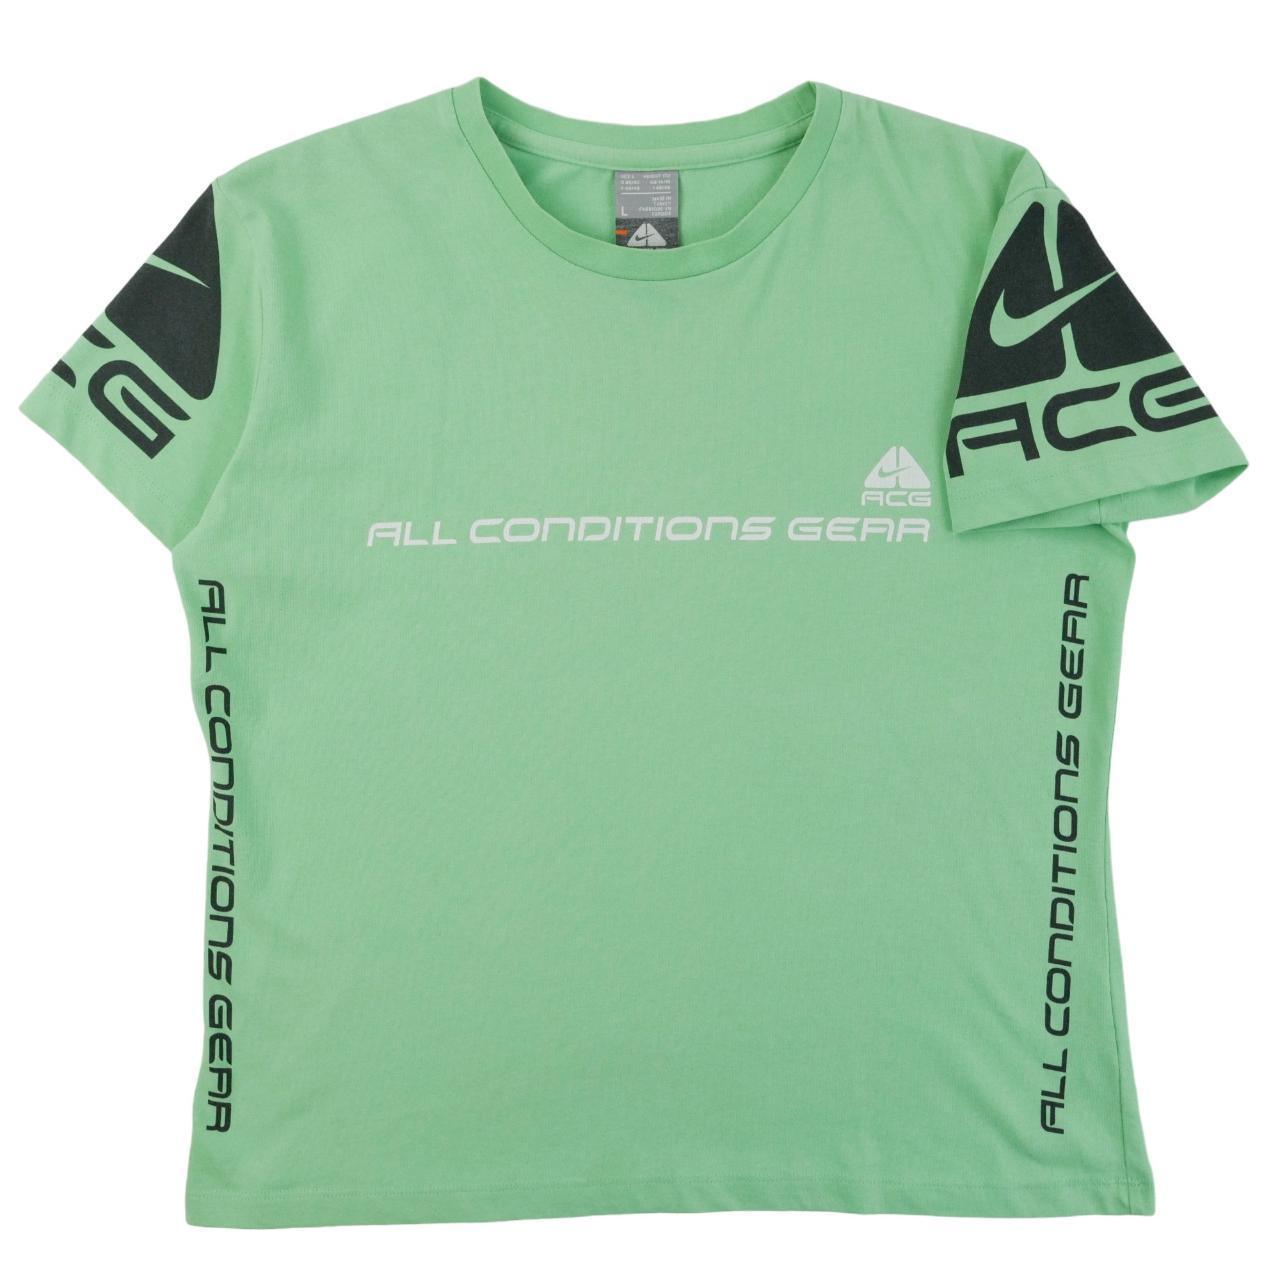 Vintage Nike ACG T Shirt Womans Size M - Known Source